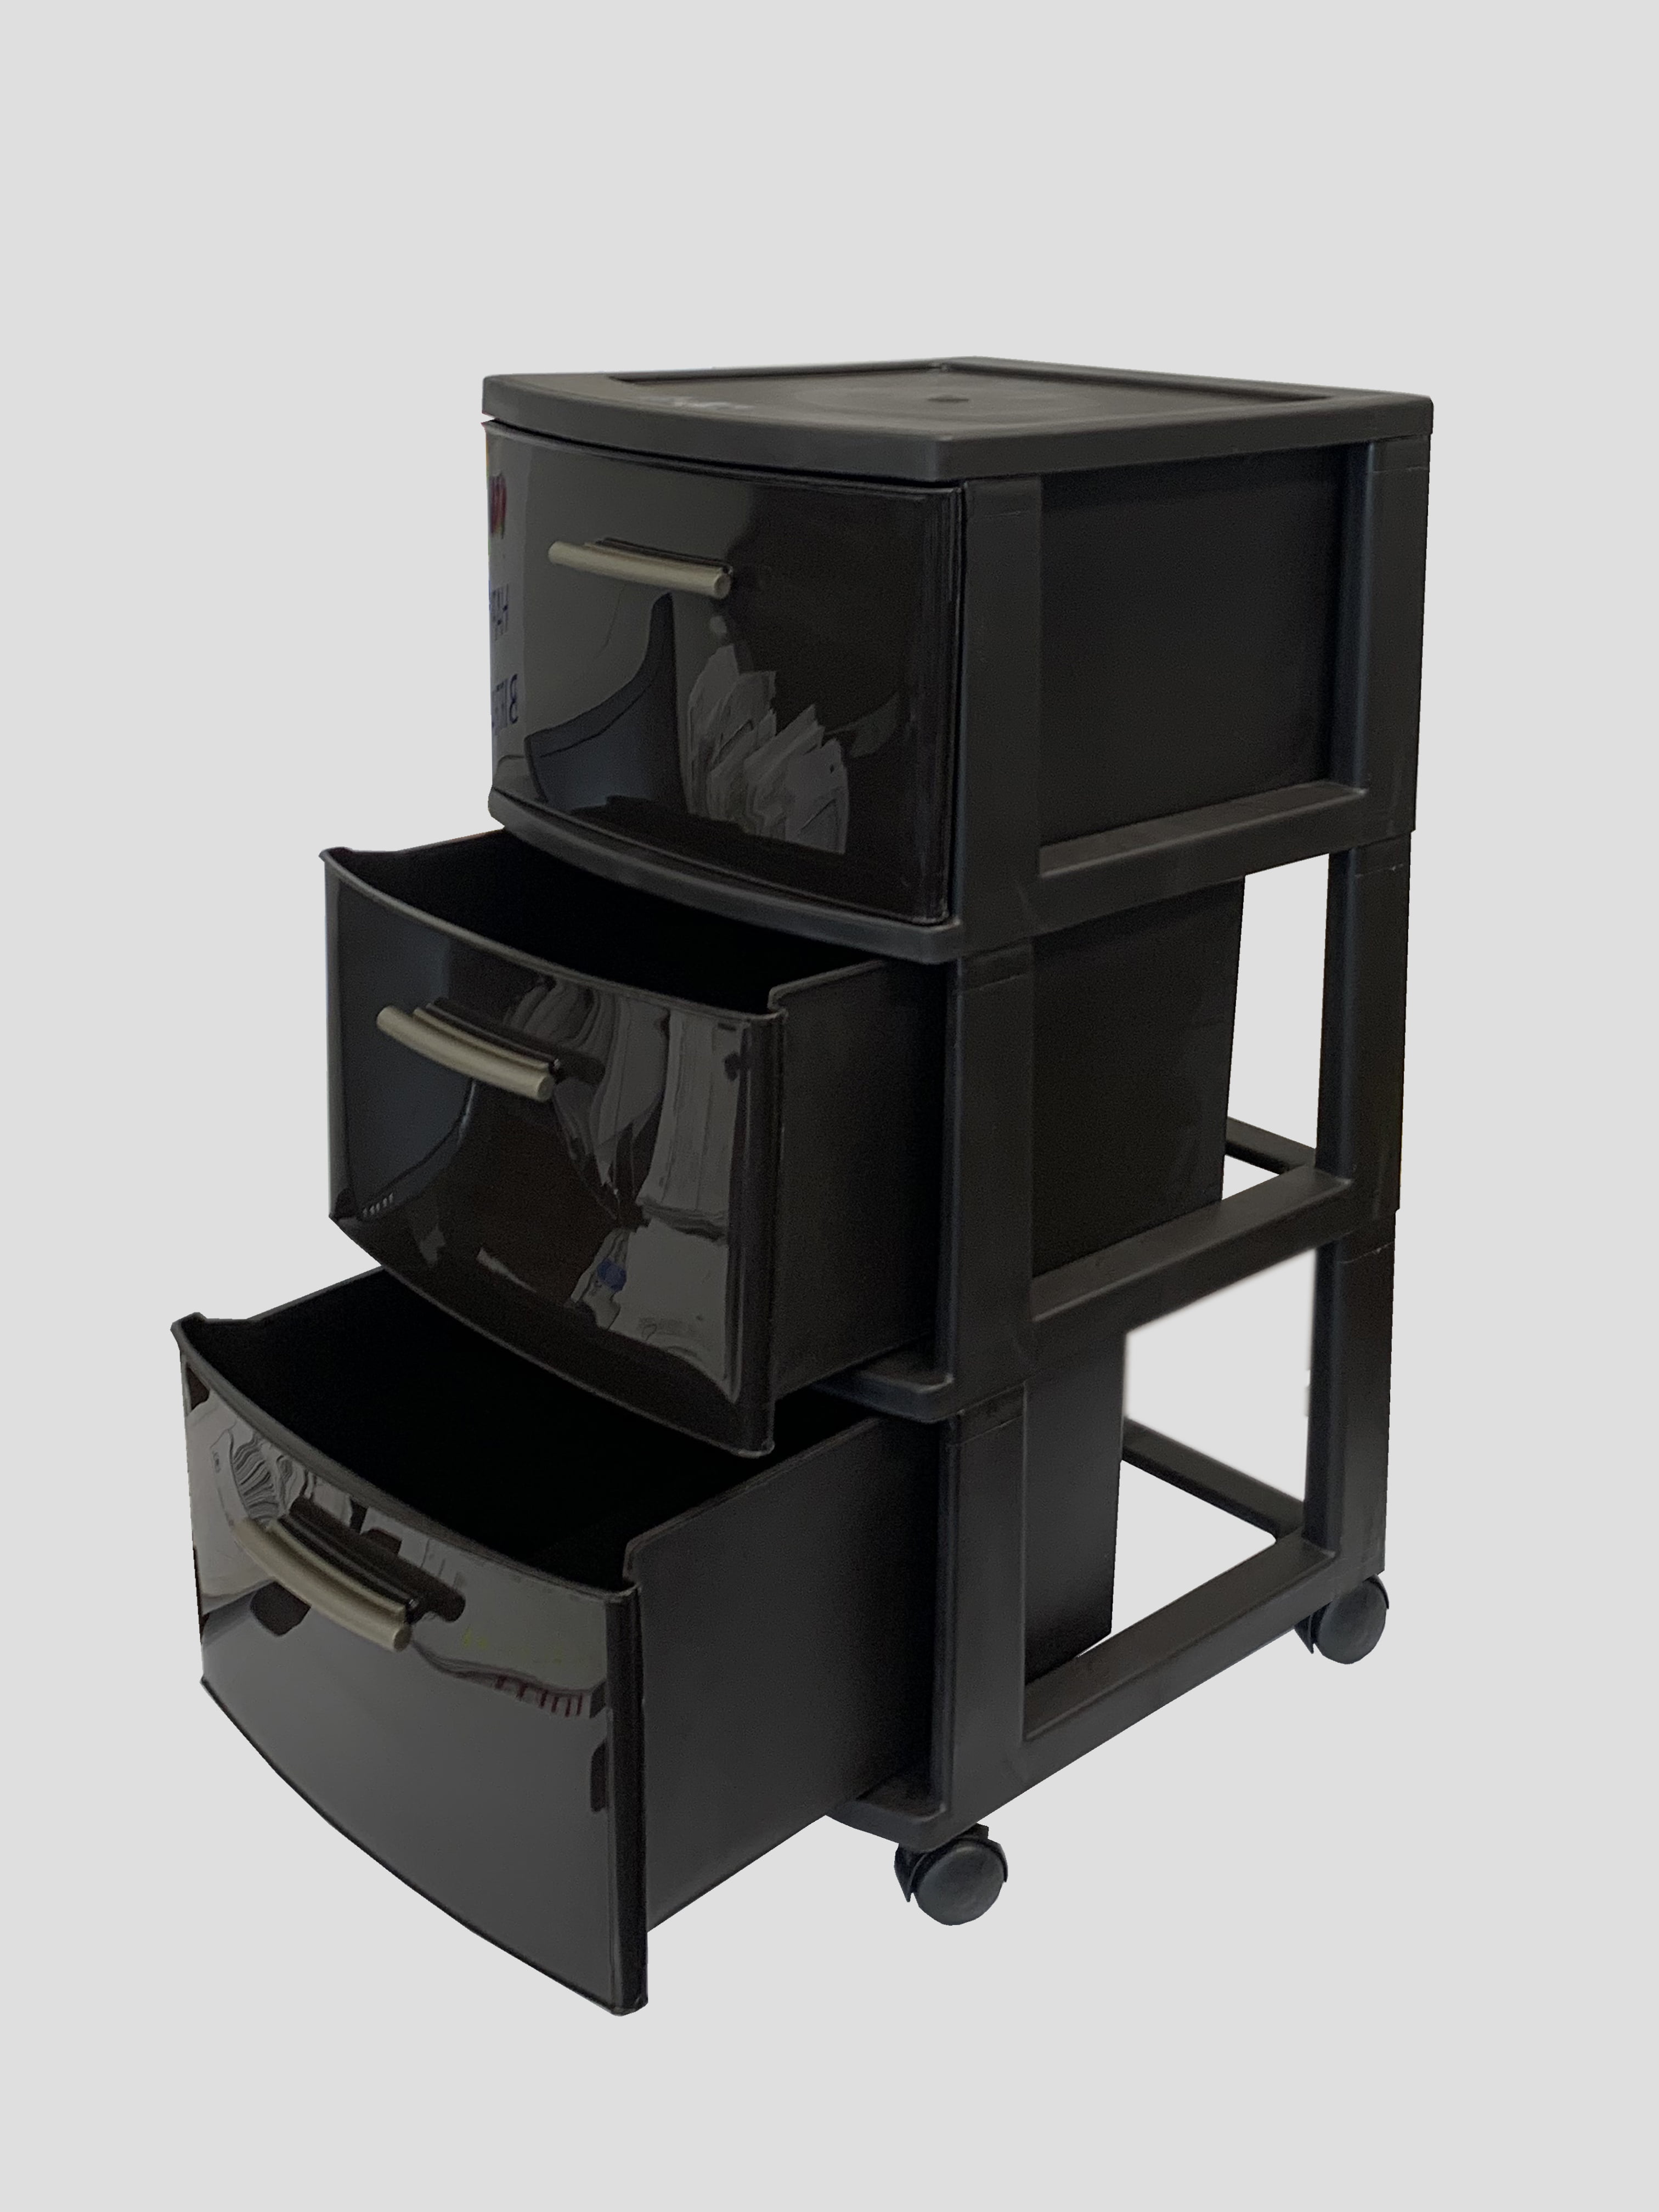 MQ Eclypse 3-Drawer Storage Unit - Black